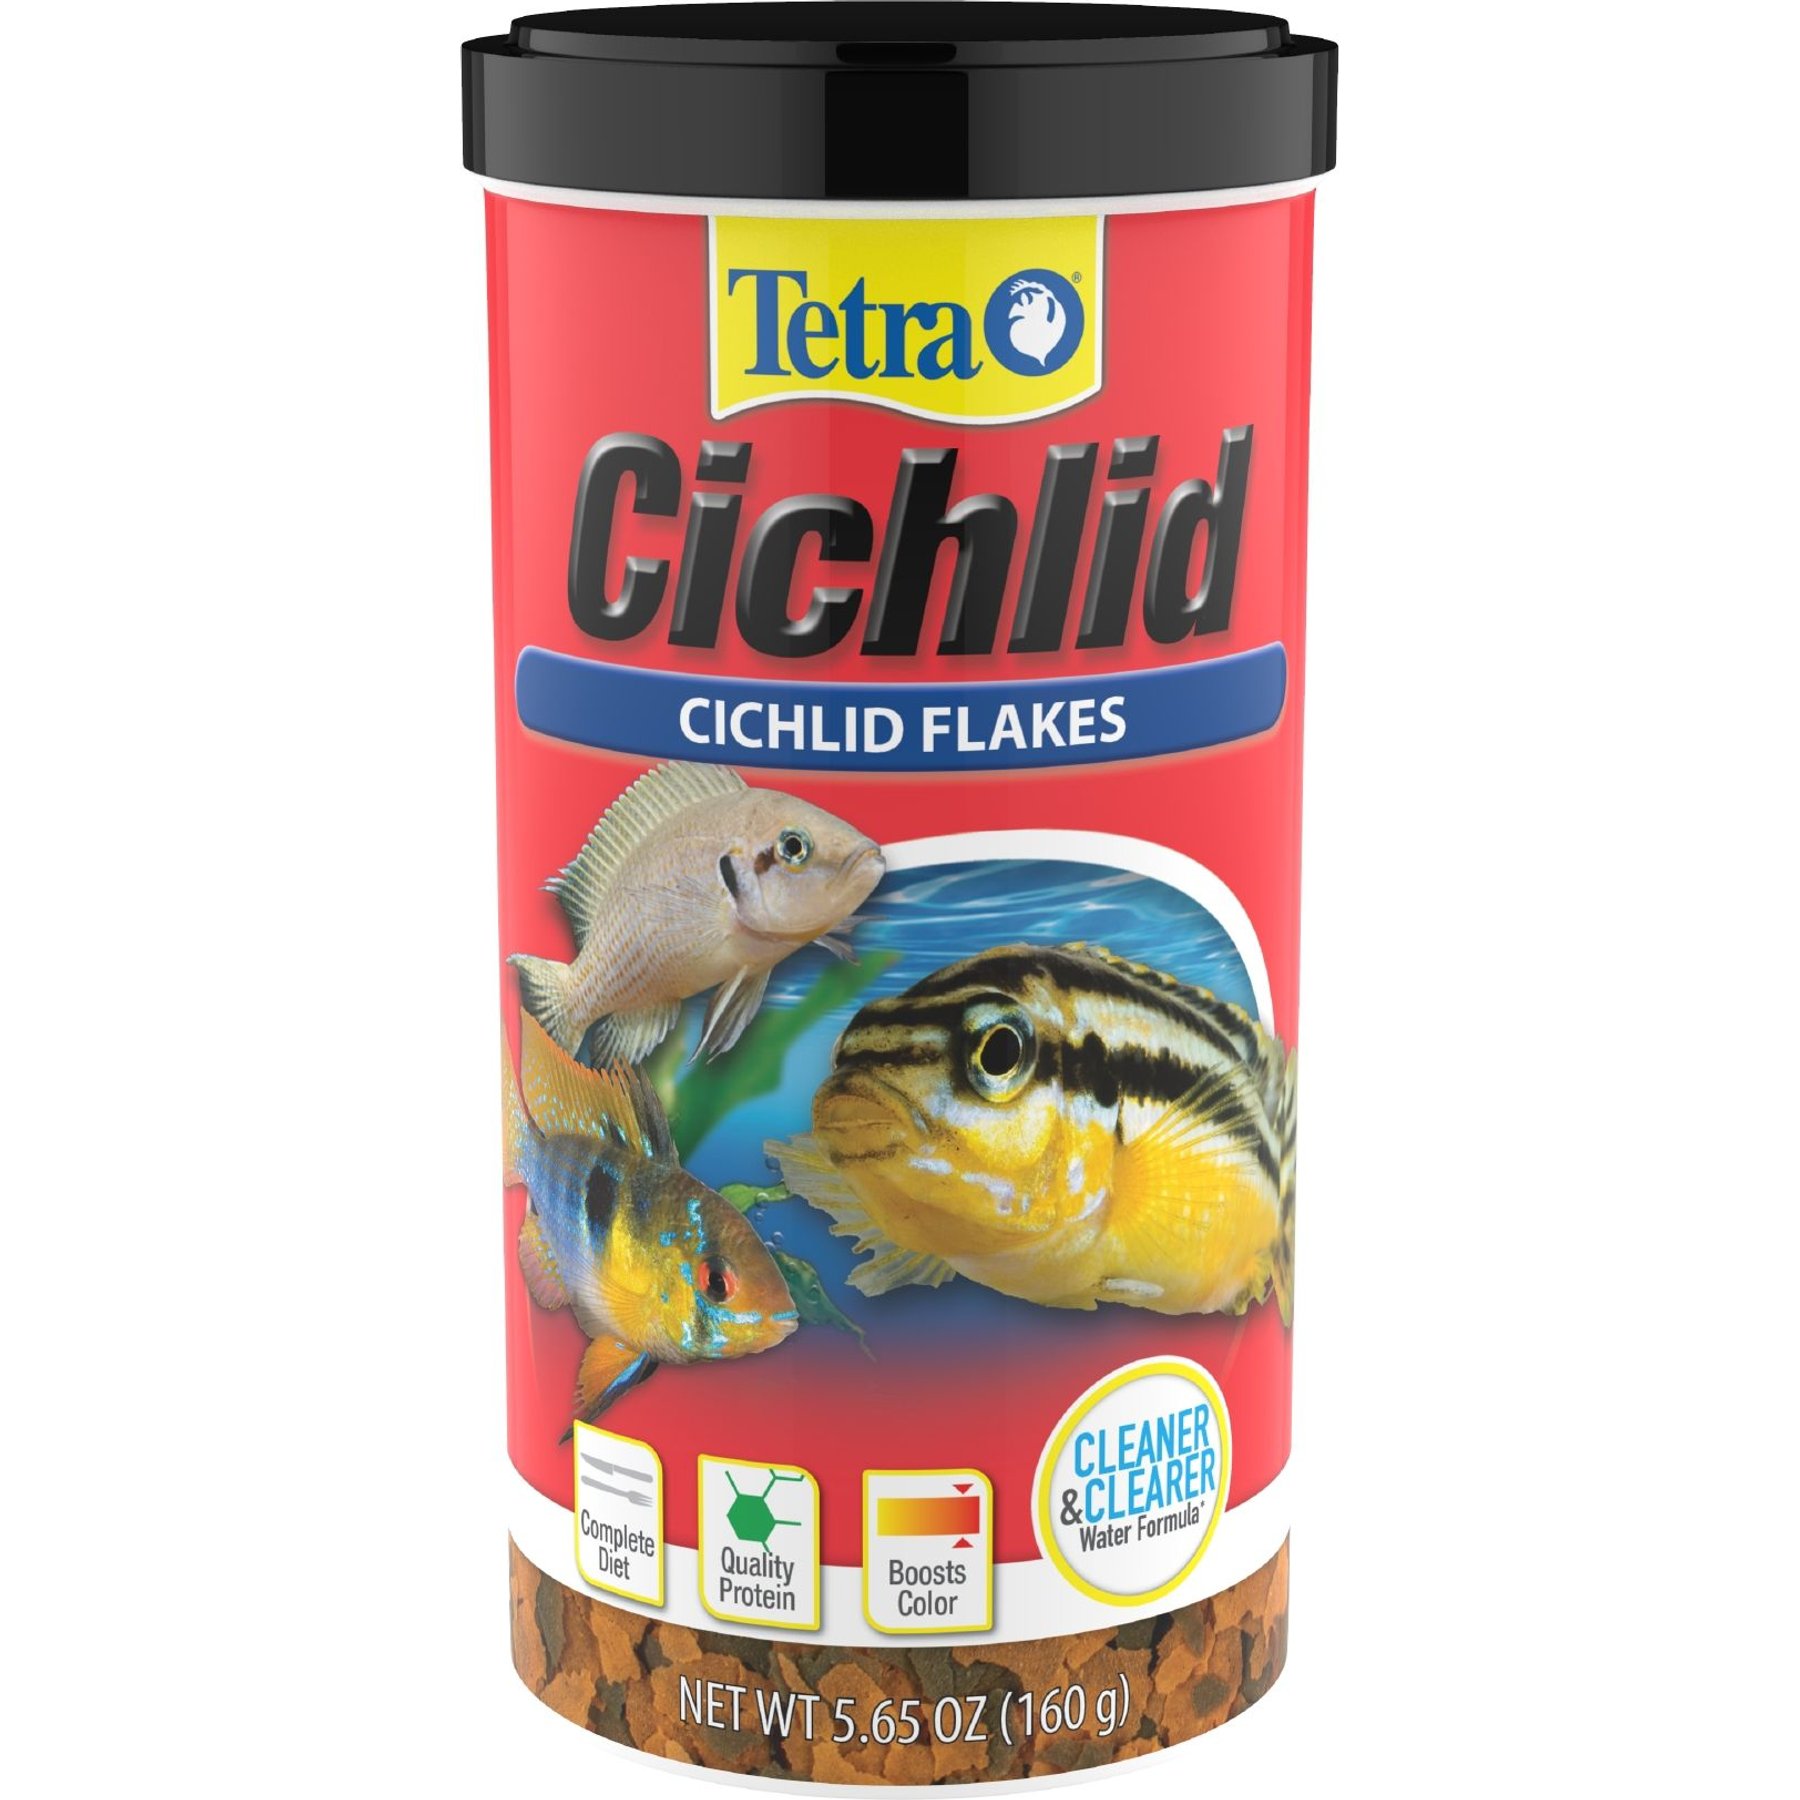  TetraCichlid Floating Cichlid Sticks 11.3 Ounces, Pond Fish Food,  Nutritionally Balanced : Pet Supplies